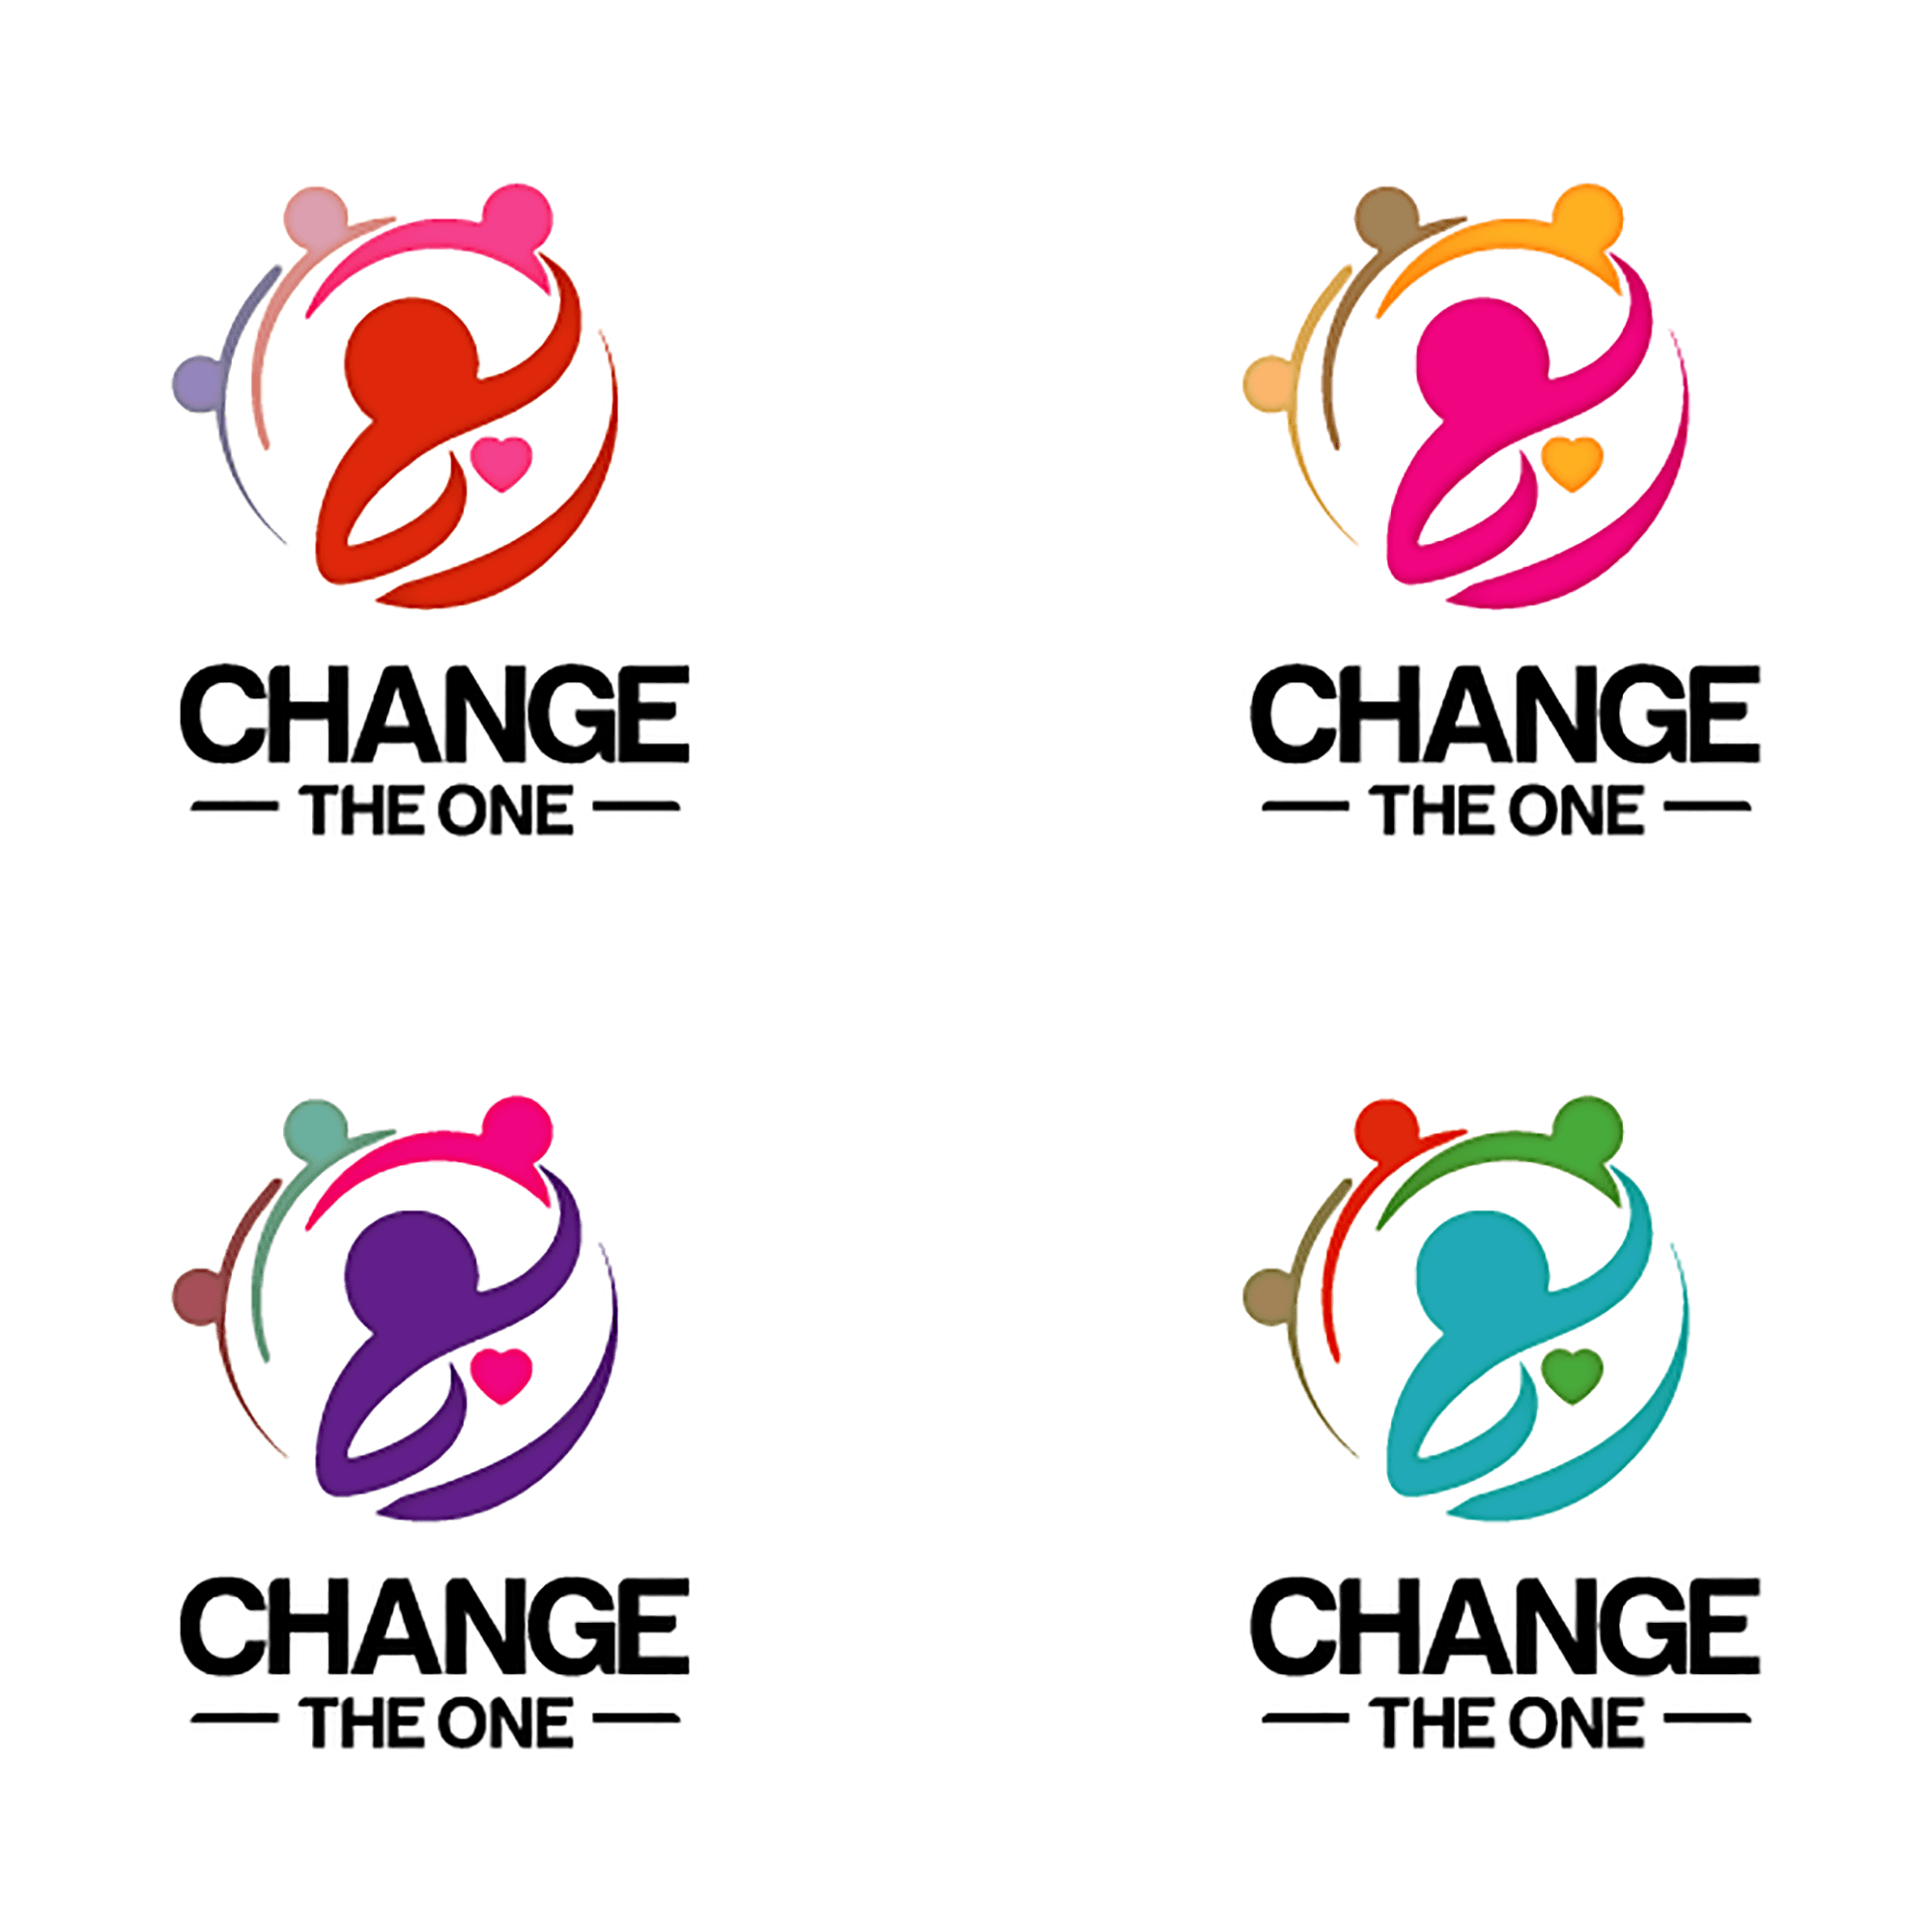 Organization Logo - Missing Charity Organization Logo Design Elements | Zillion Designs